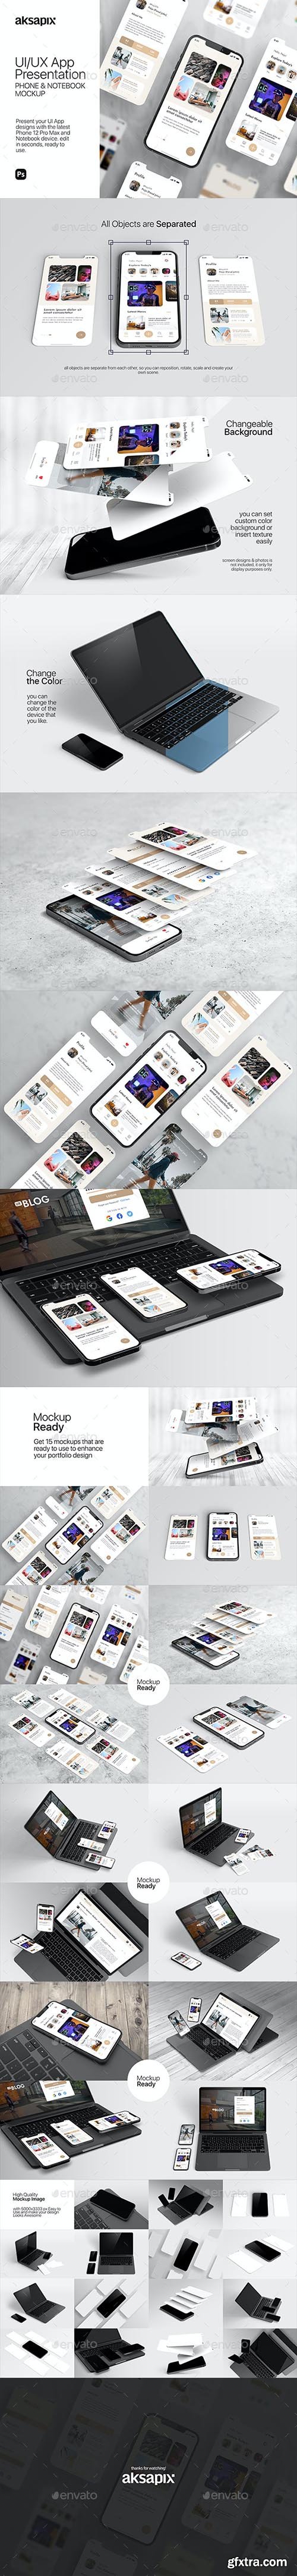 GraphicRiver - UI/UX App Presentation - Phone & Notebook Mockup 30439812